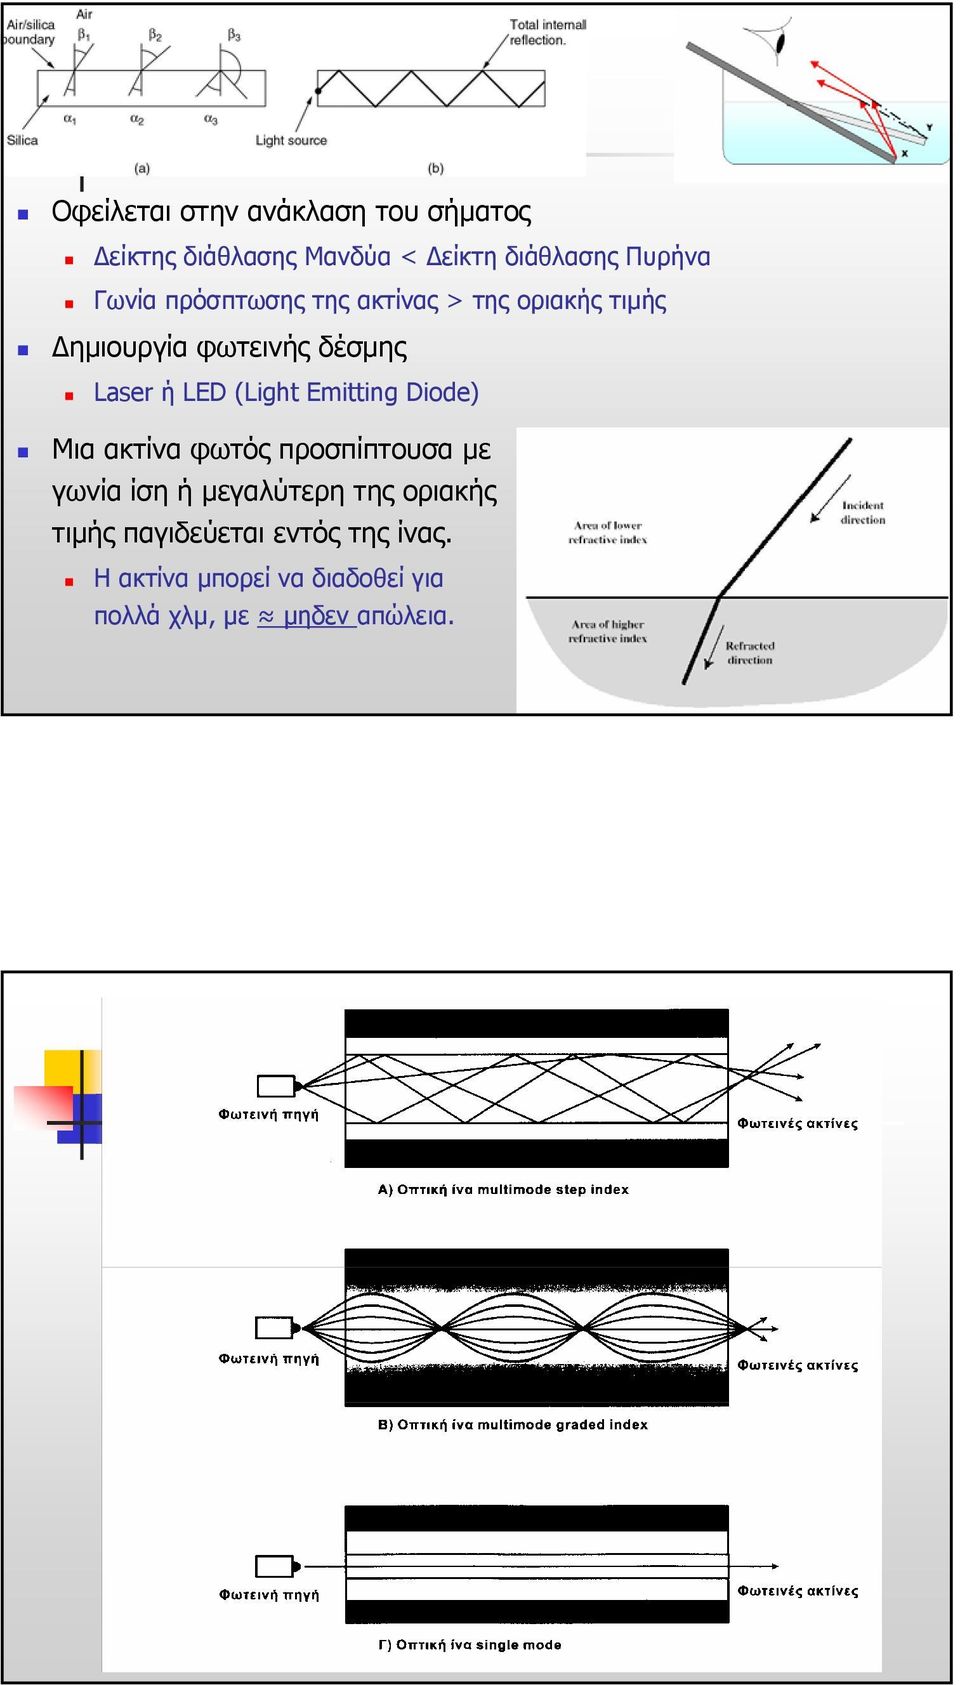 LED (Light Emitting Diode) Μια ακτίνα φωτός προσπίπτουσα µε γωνία ίση ή µεγαλύτερη της